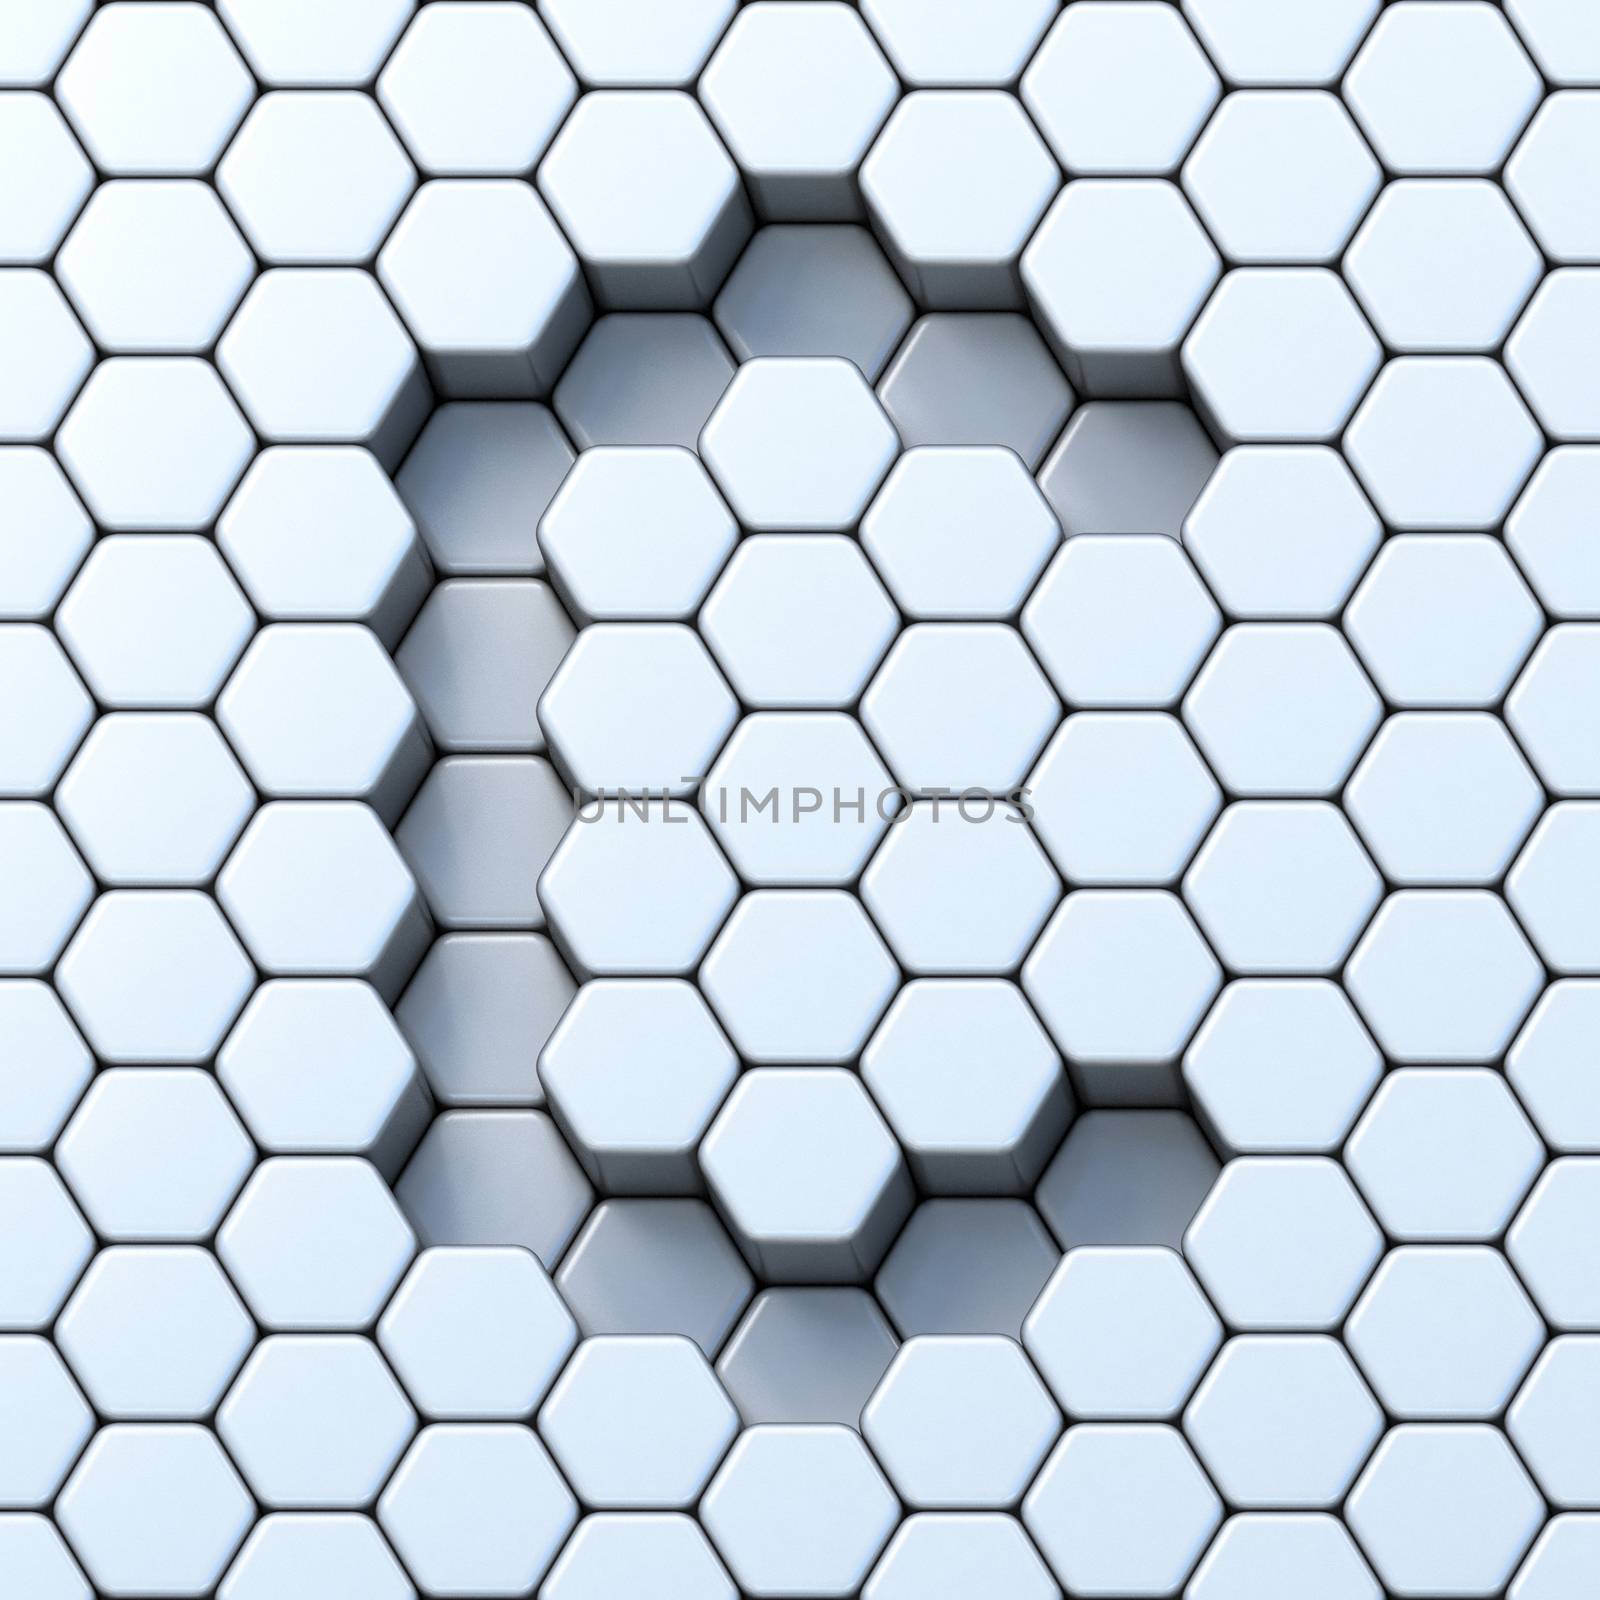 Hexagonal grid letter C 3D by djmilic